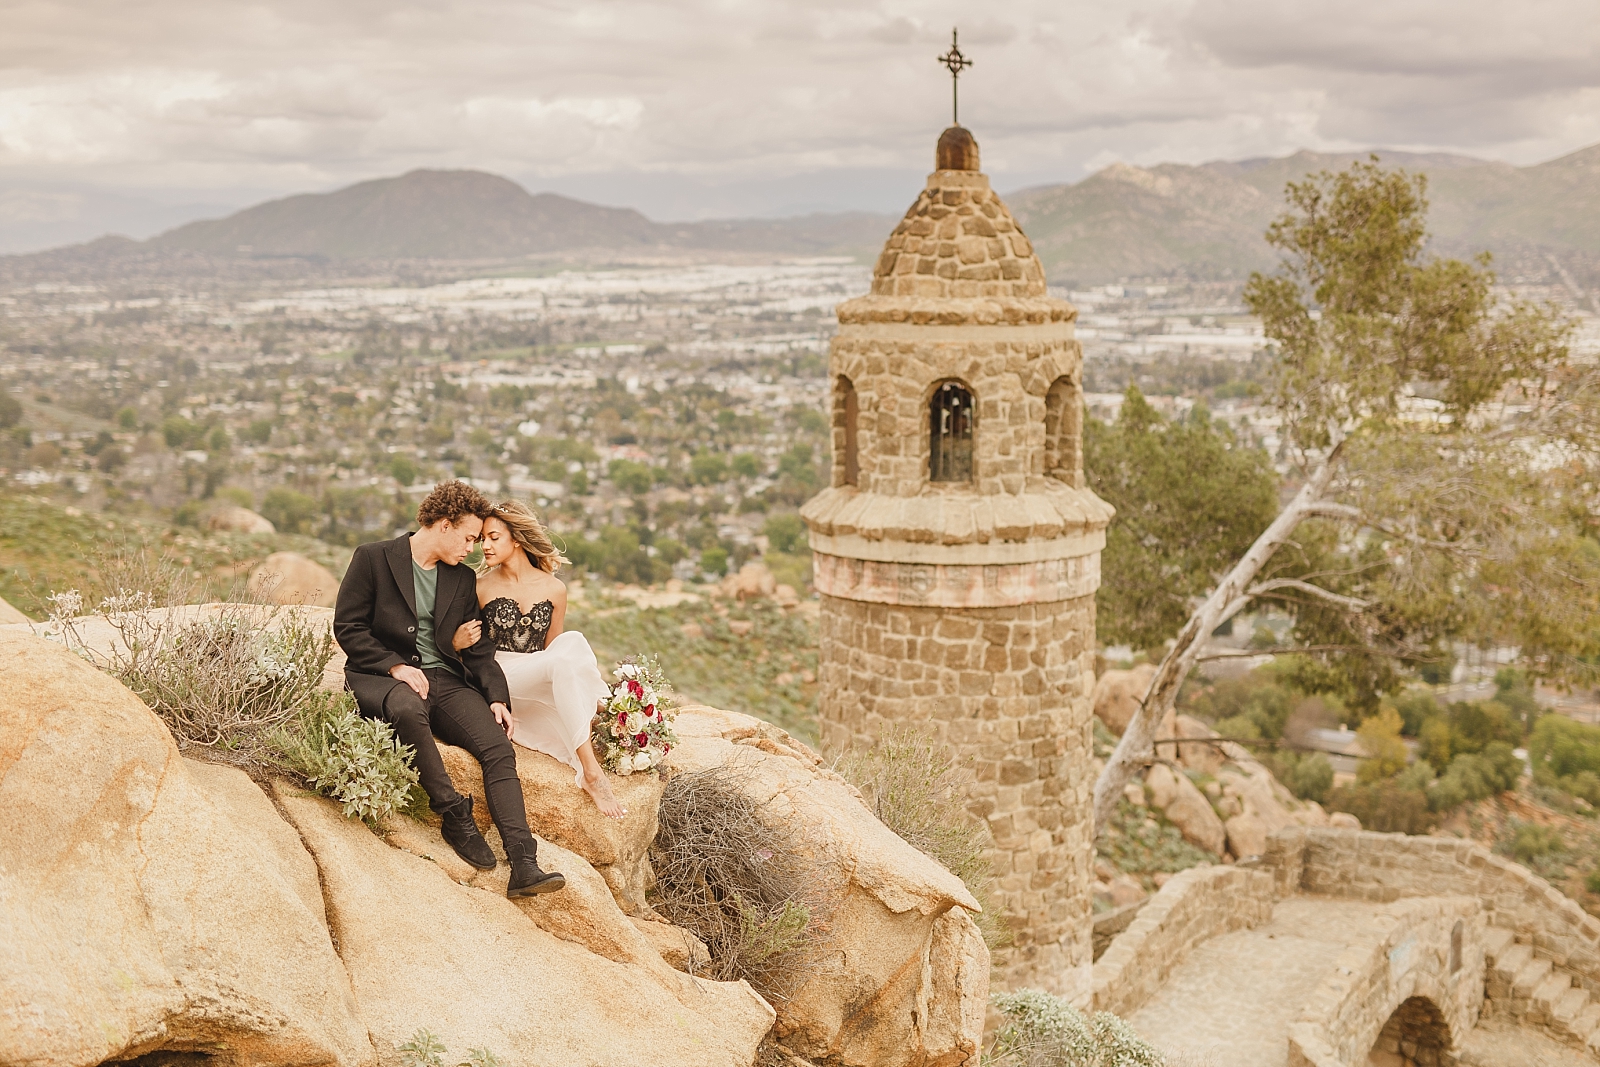 Engagement photos at Mount Rubidoux